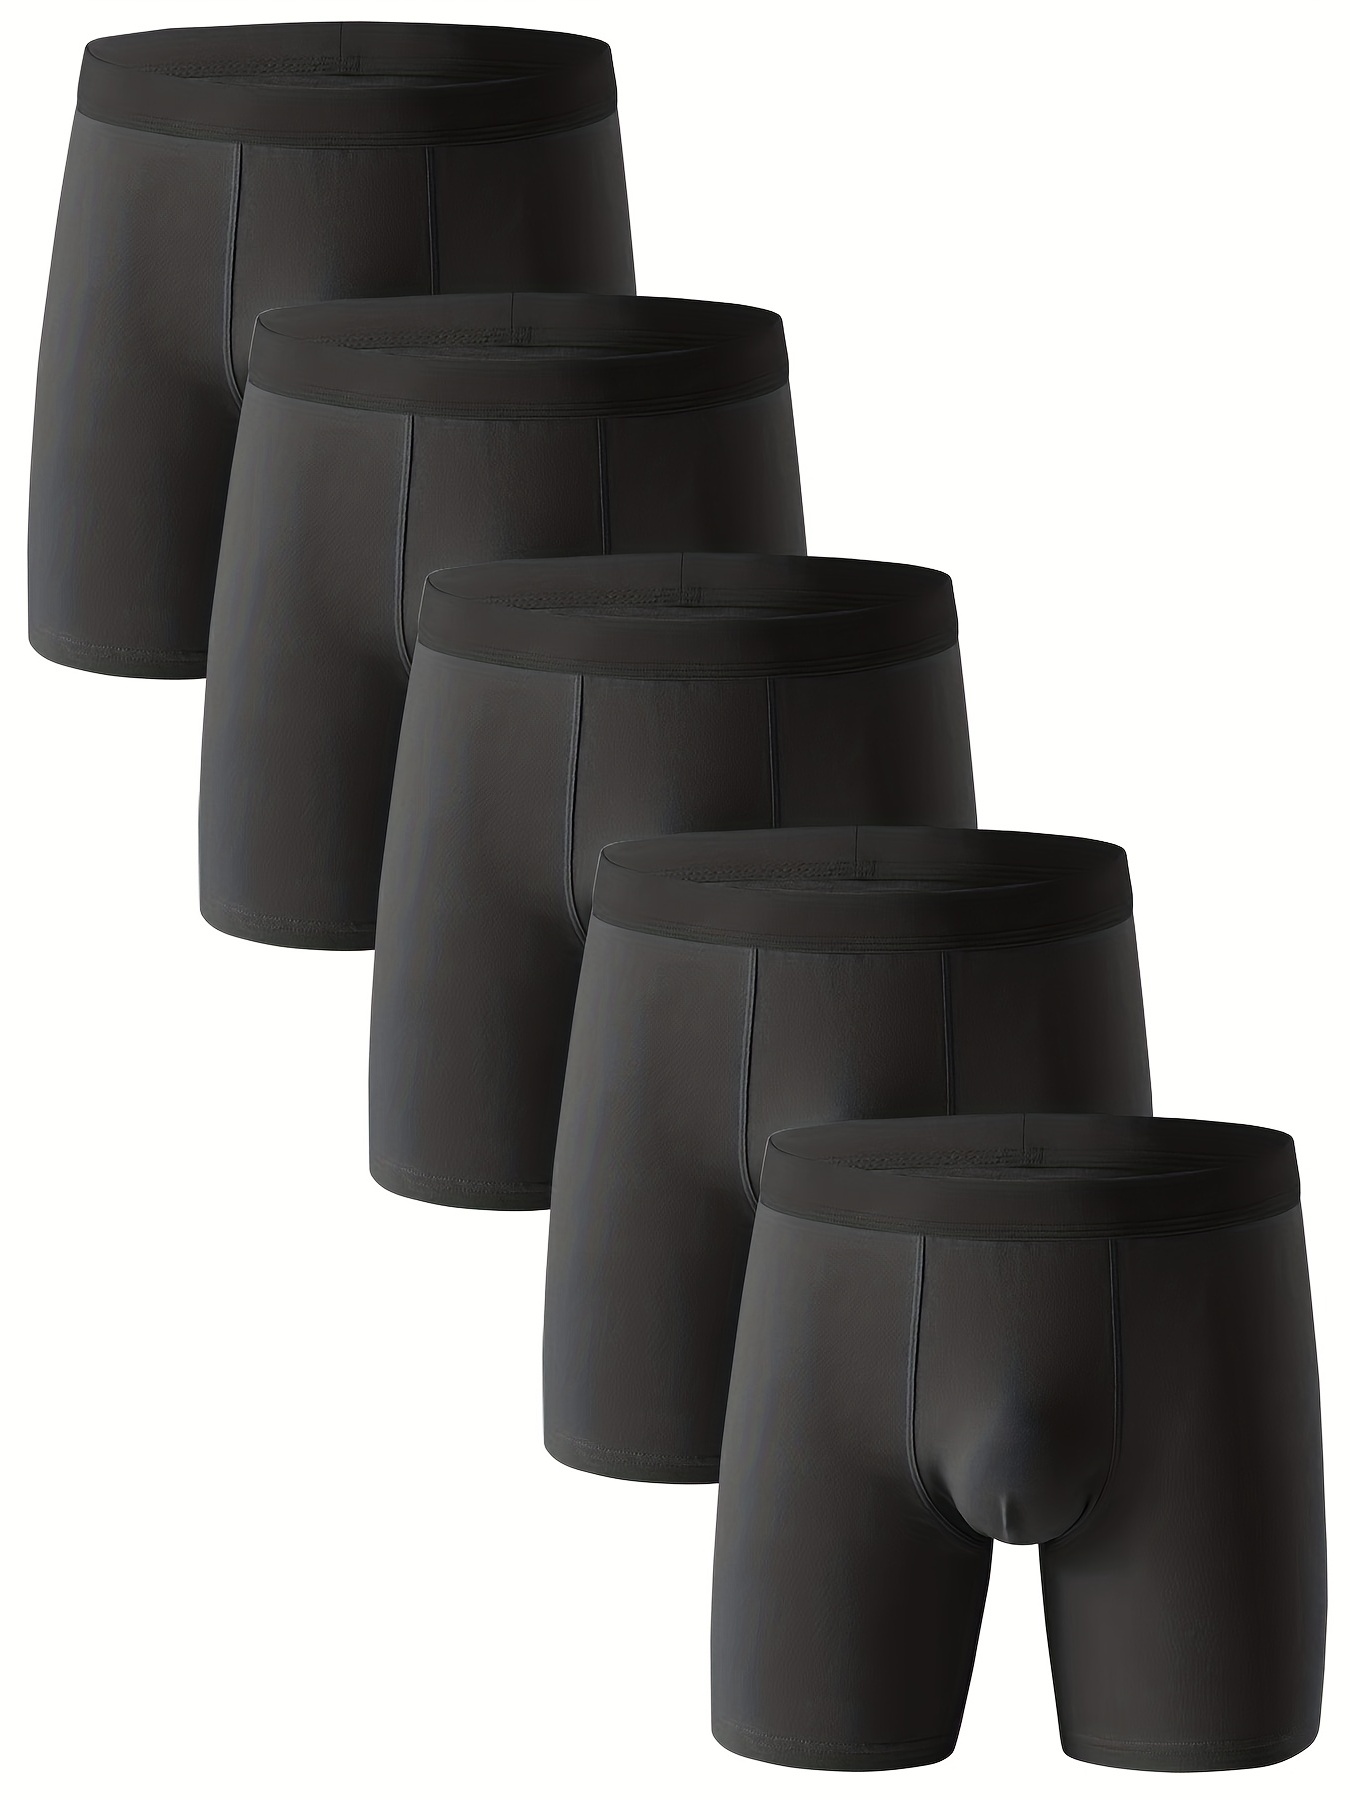 Lucky Brand Men's Underwear - Cotton Blend Stretch Boxer Briefs (6 Pack),  Size Medium, Black/Light Grey/Black Print